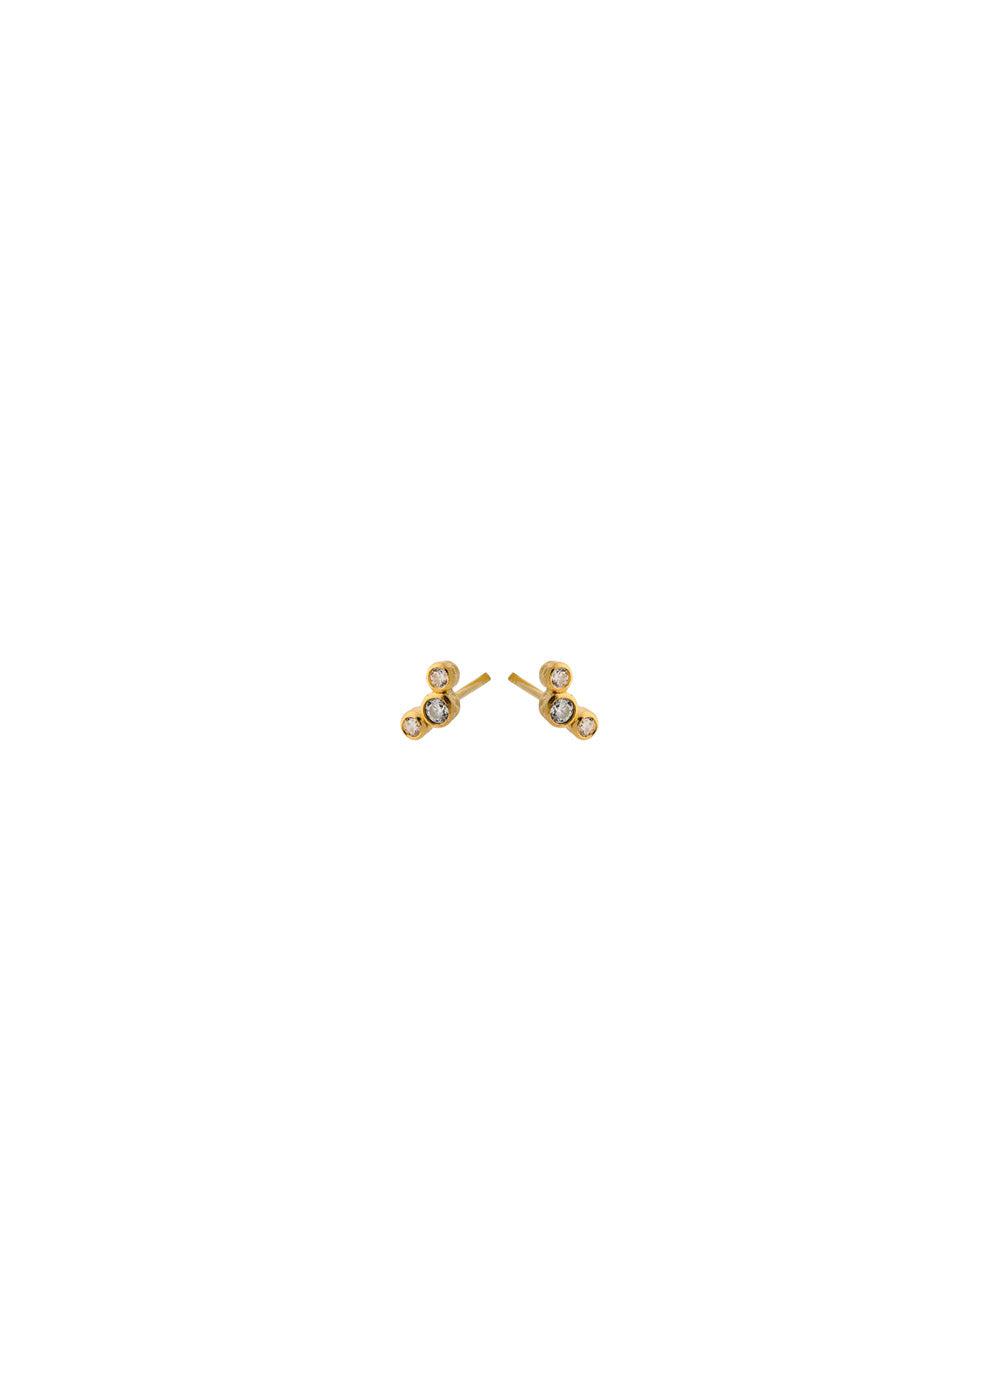 Orion Earsticks size 8 mm - Gold